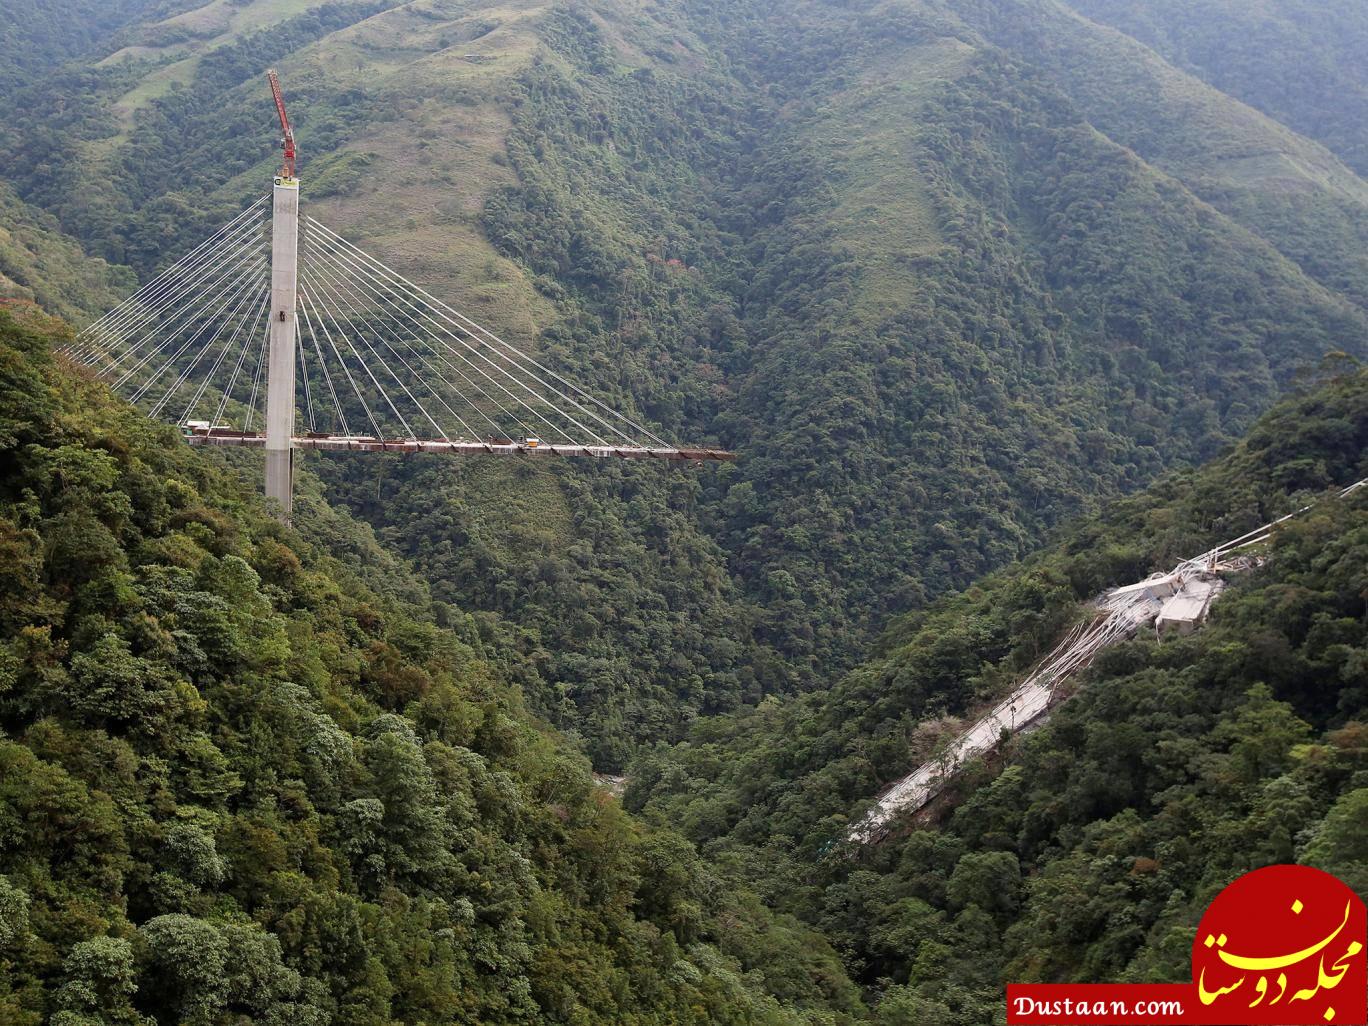 www.dustaan.com-فرو ریختن پل نیمه‌ کاره در کلمبیا جان ۹ تن را گرفت +تصاویر